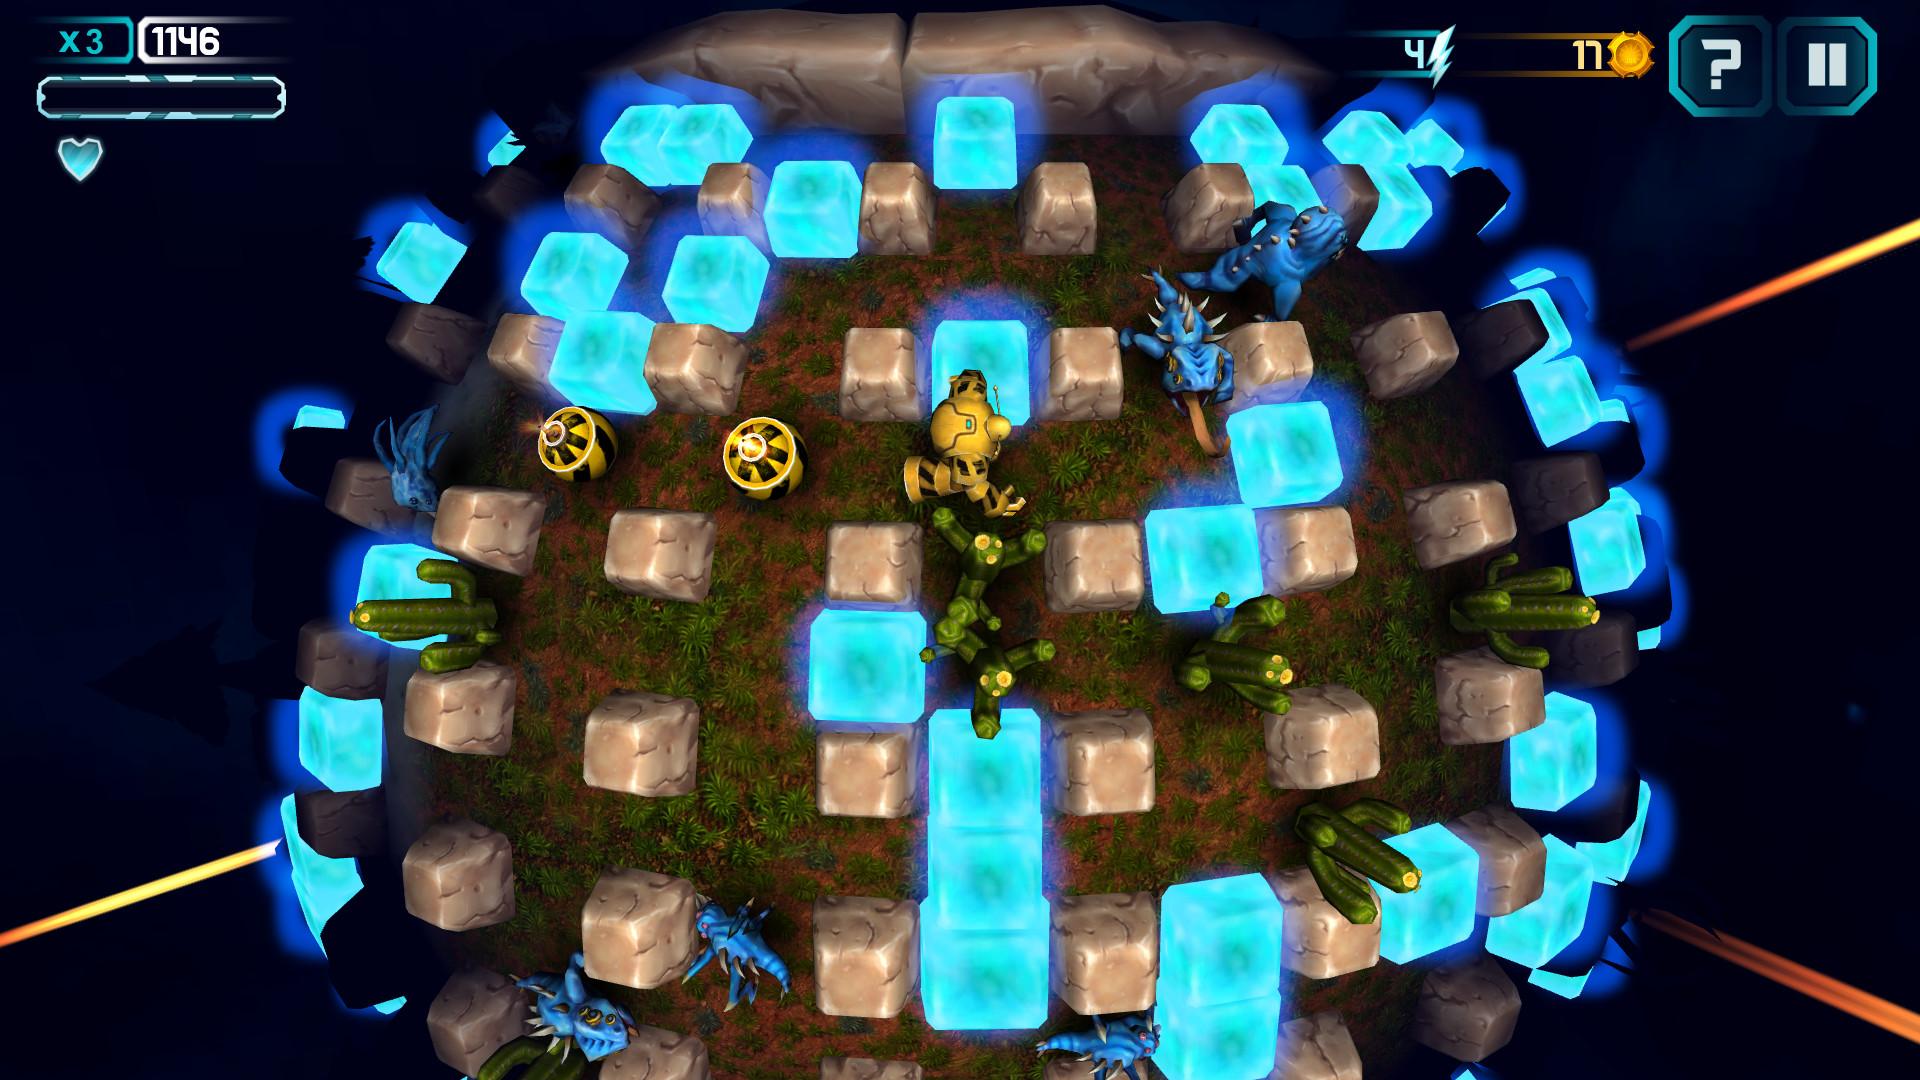 Screenshot №3 from game BomberZone